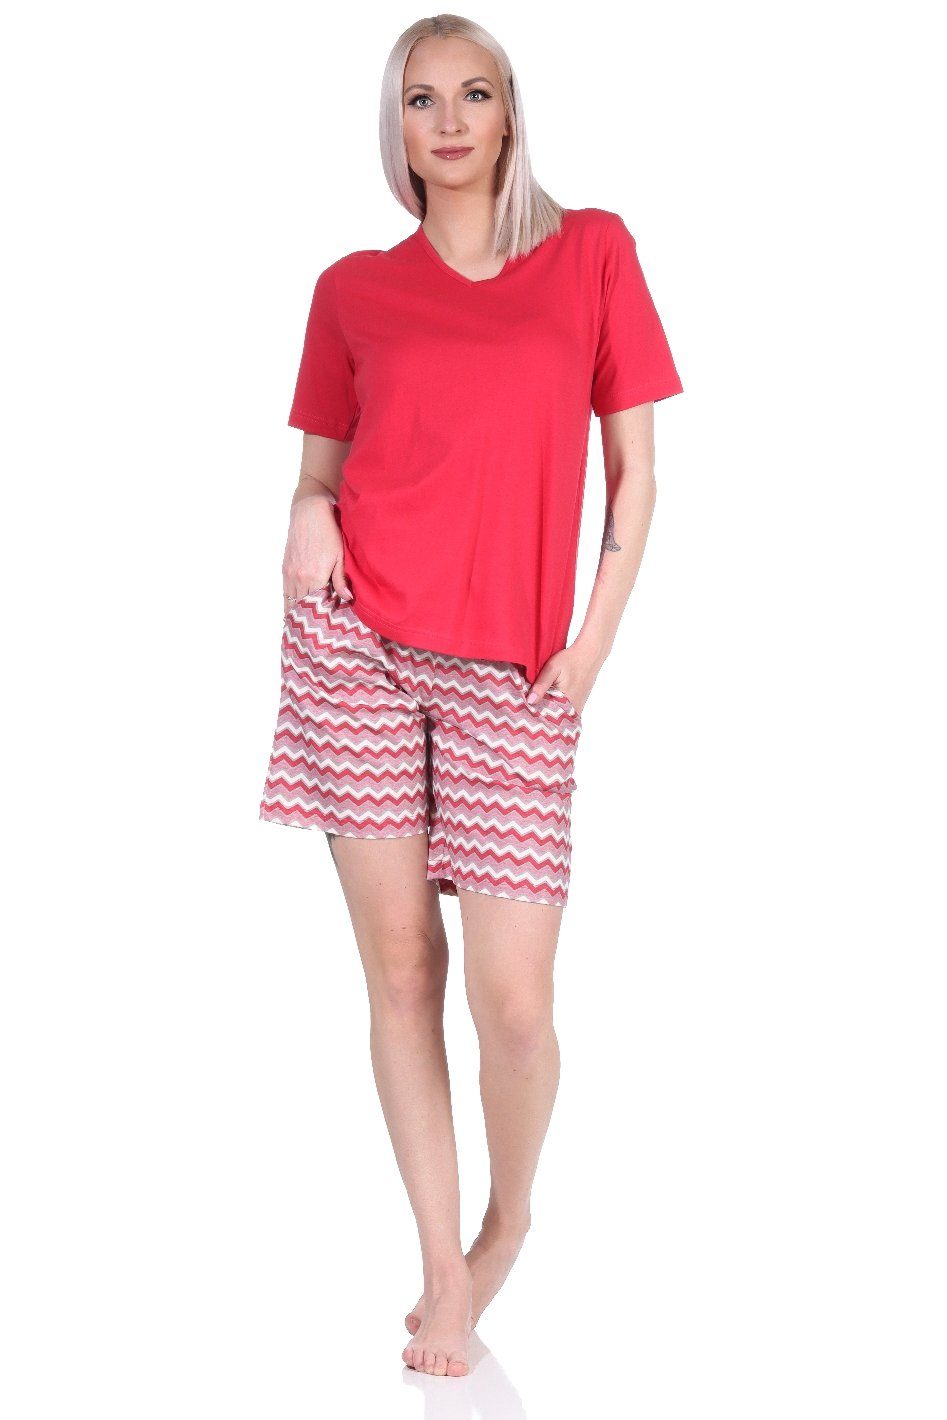 mit Normann Shorts Damen gemusterten Pyjama Shorty rot strahlenden Farben in kurz Pyjama